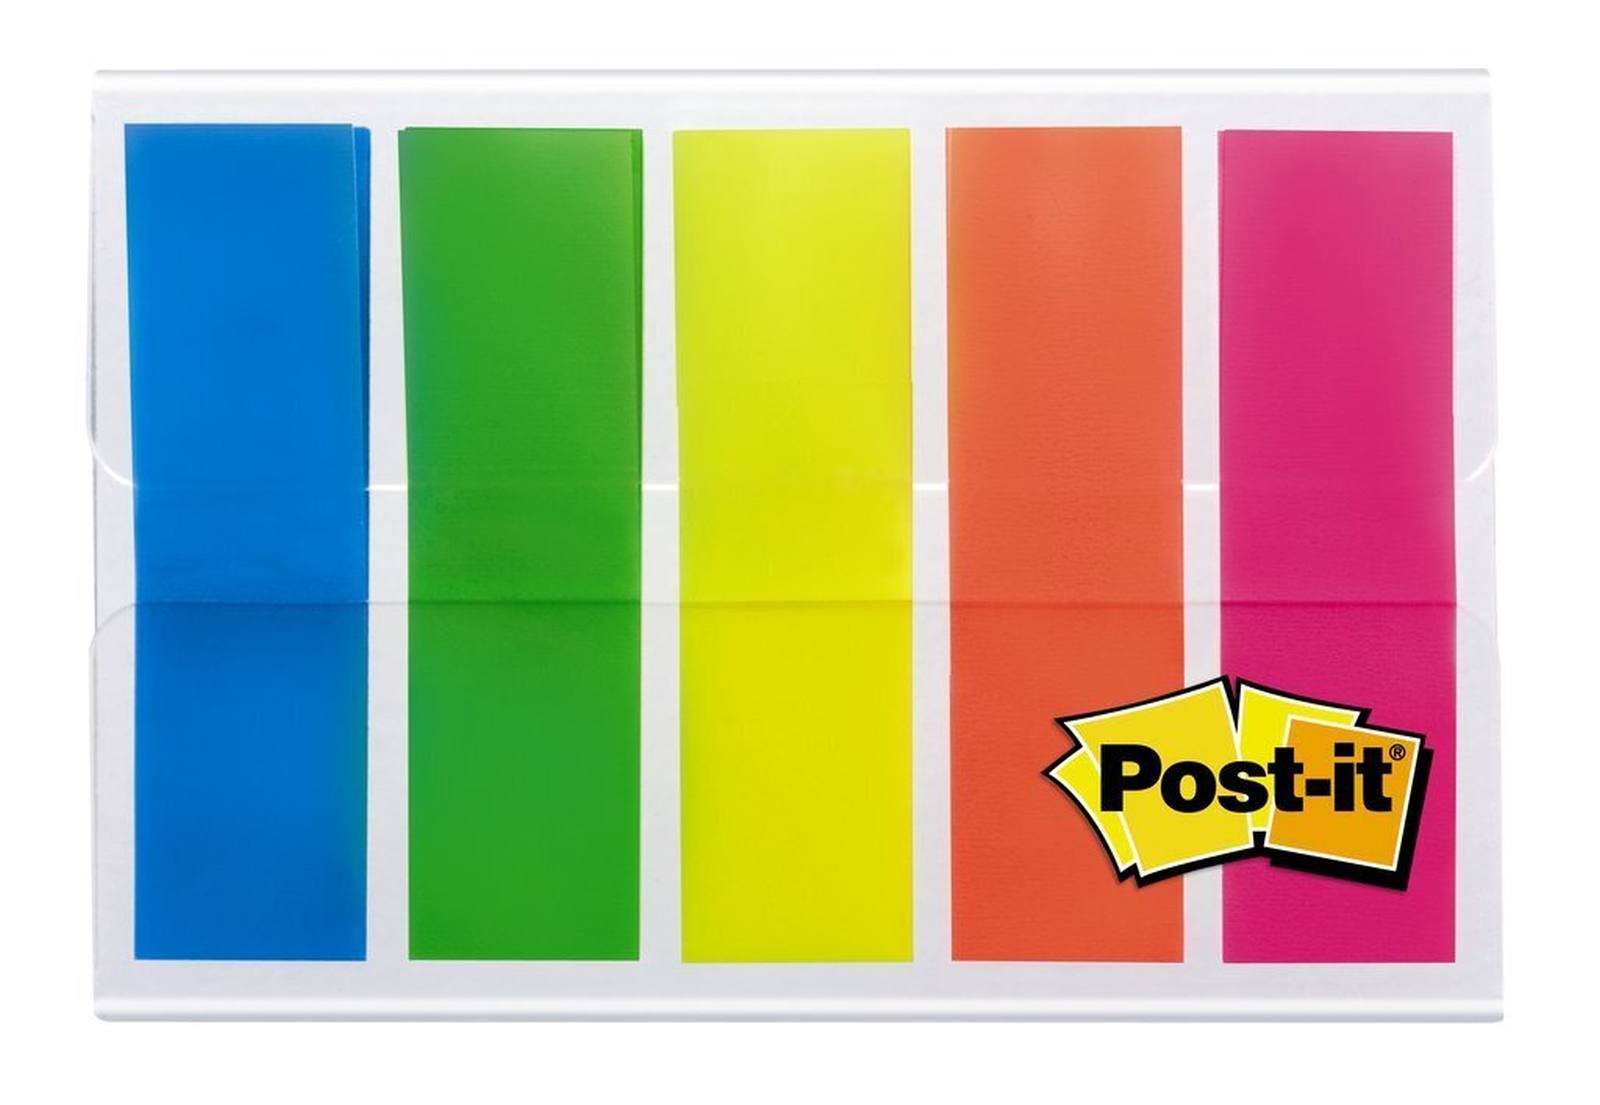 3M Post-it Indice 683HF5, 11,9 mm x 43,2 mm, blu, giallo, verde, arancione, rosa, 5 x 20 strisce adesive